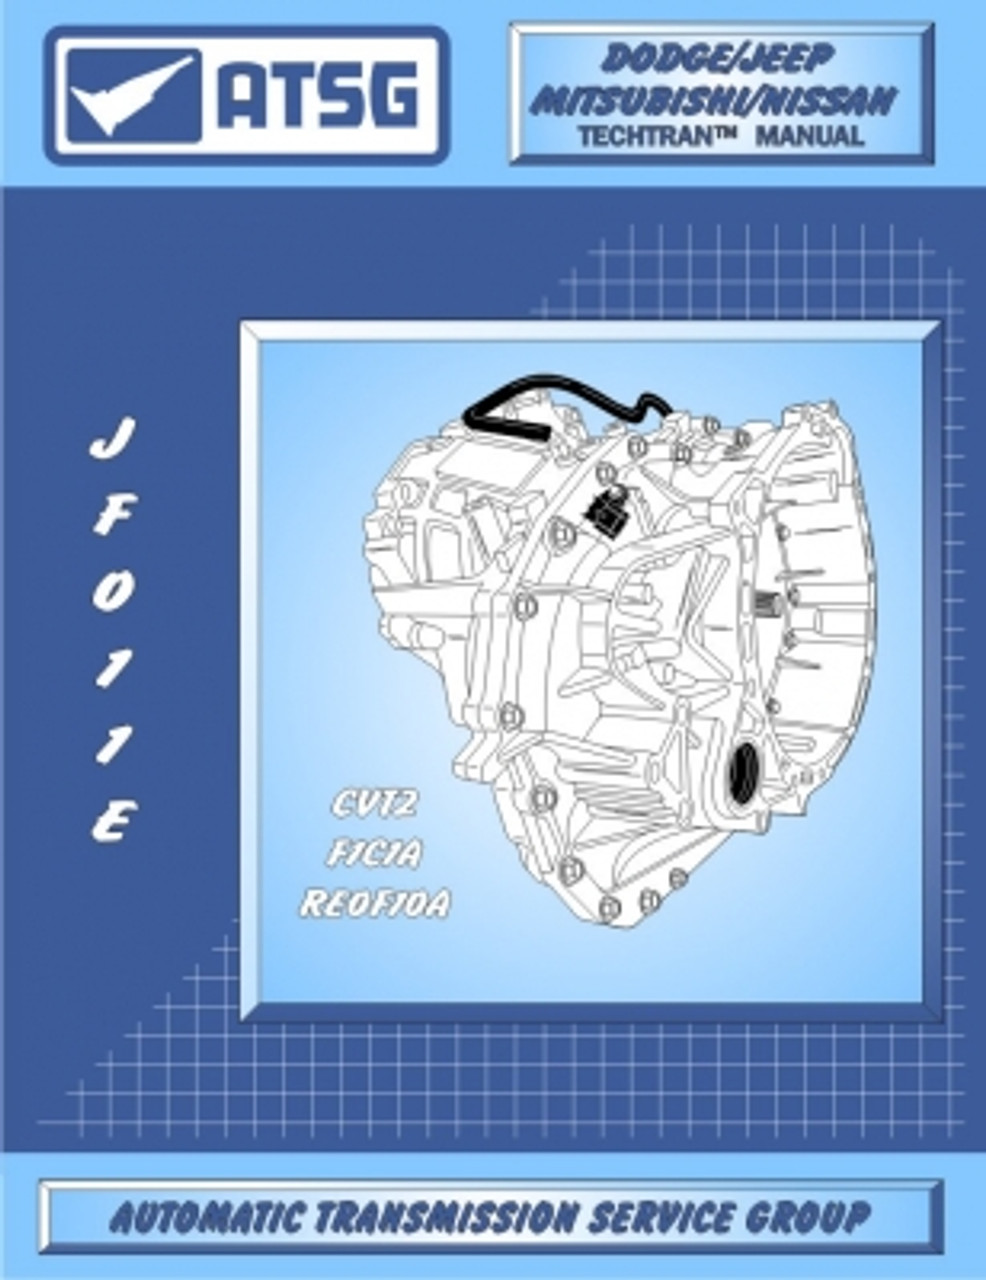 JF011E RE0F010 Transmission Technical Repair Manual by ATSG